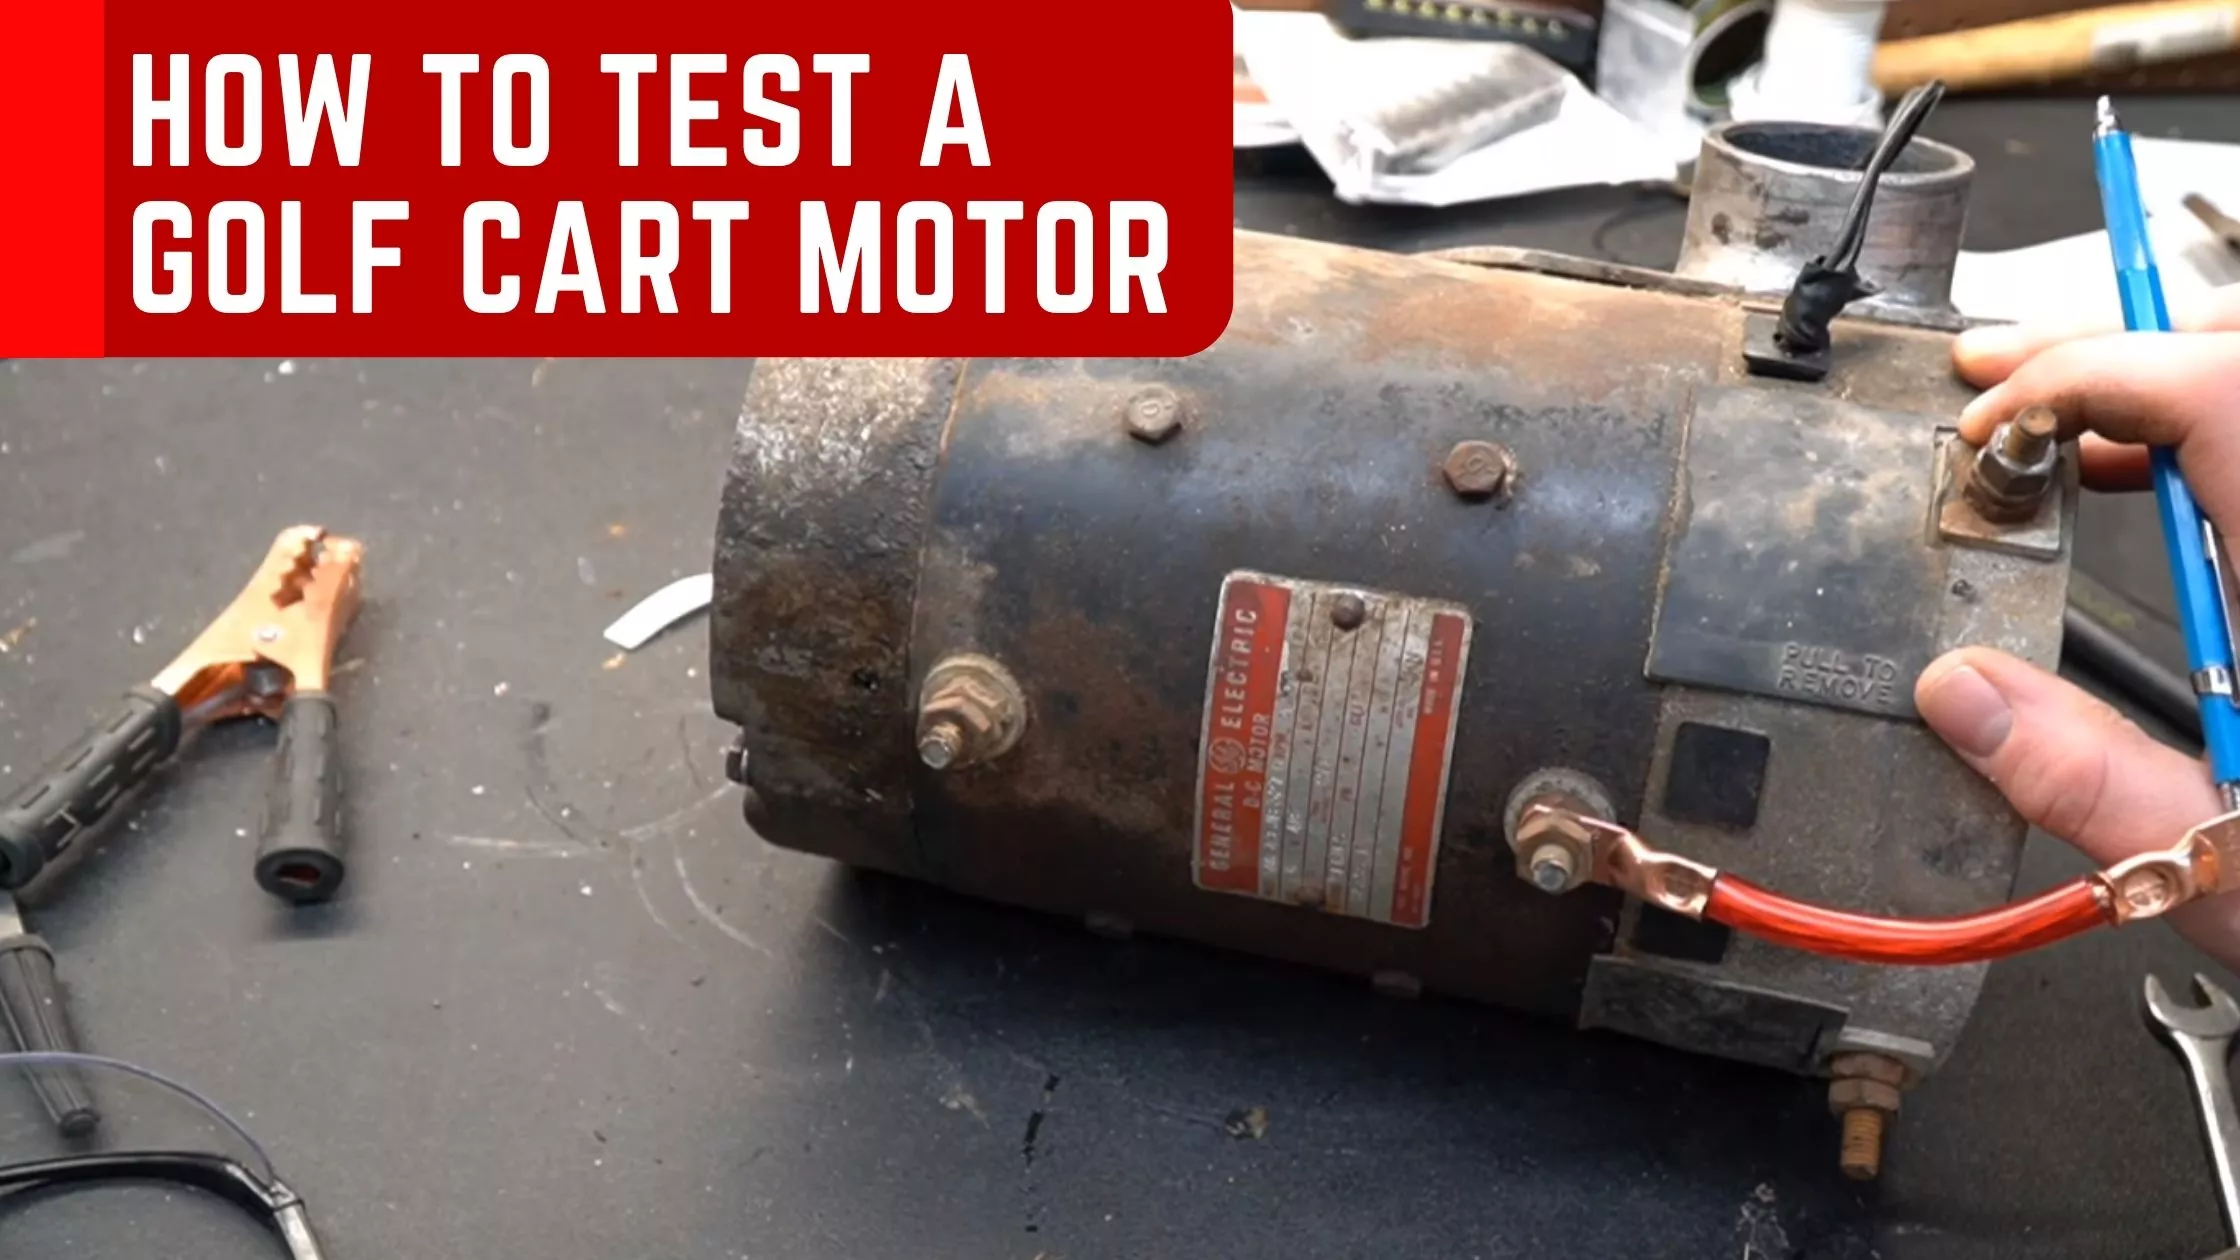 How To Test A Golf Cart Motor?